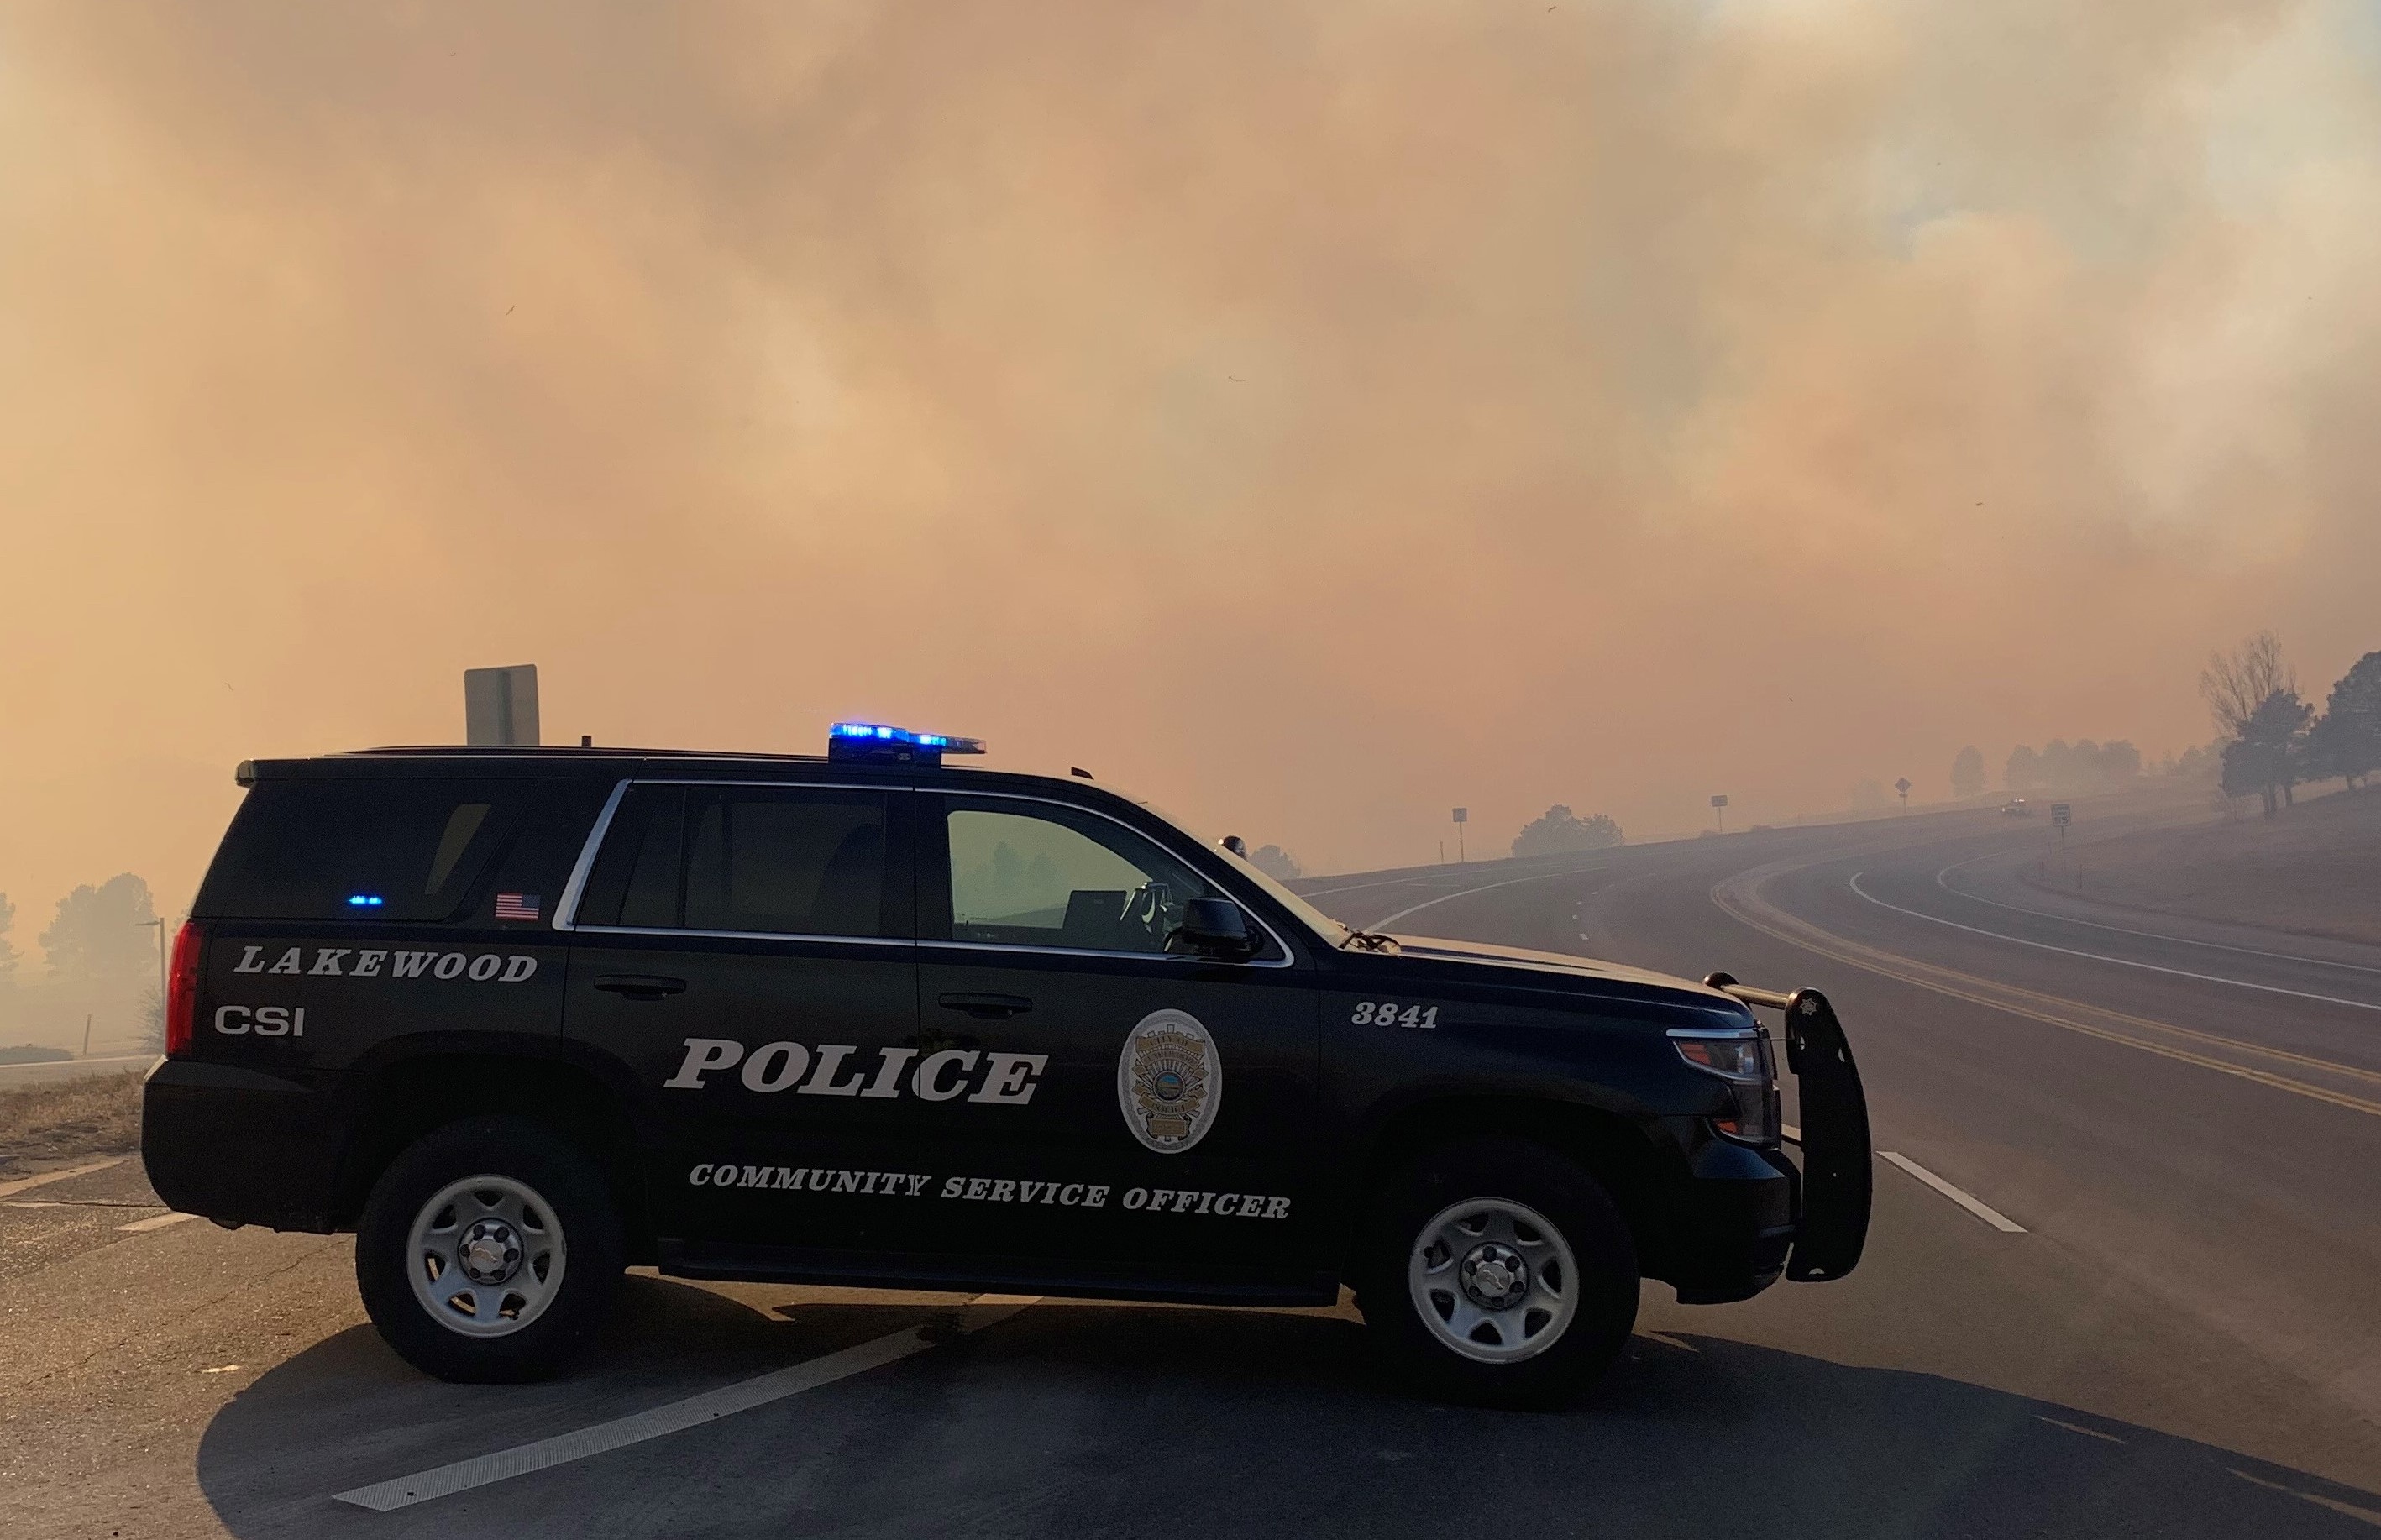 Police-vehicle-in-fire-smoke.jpg